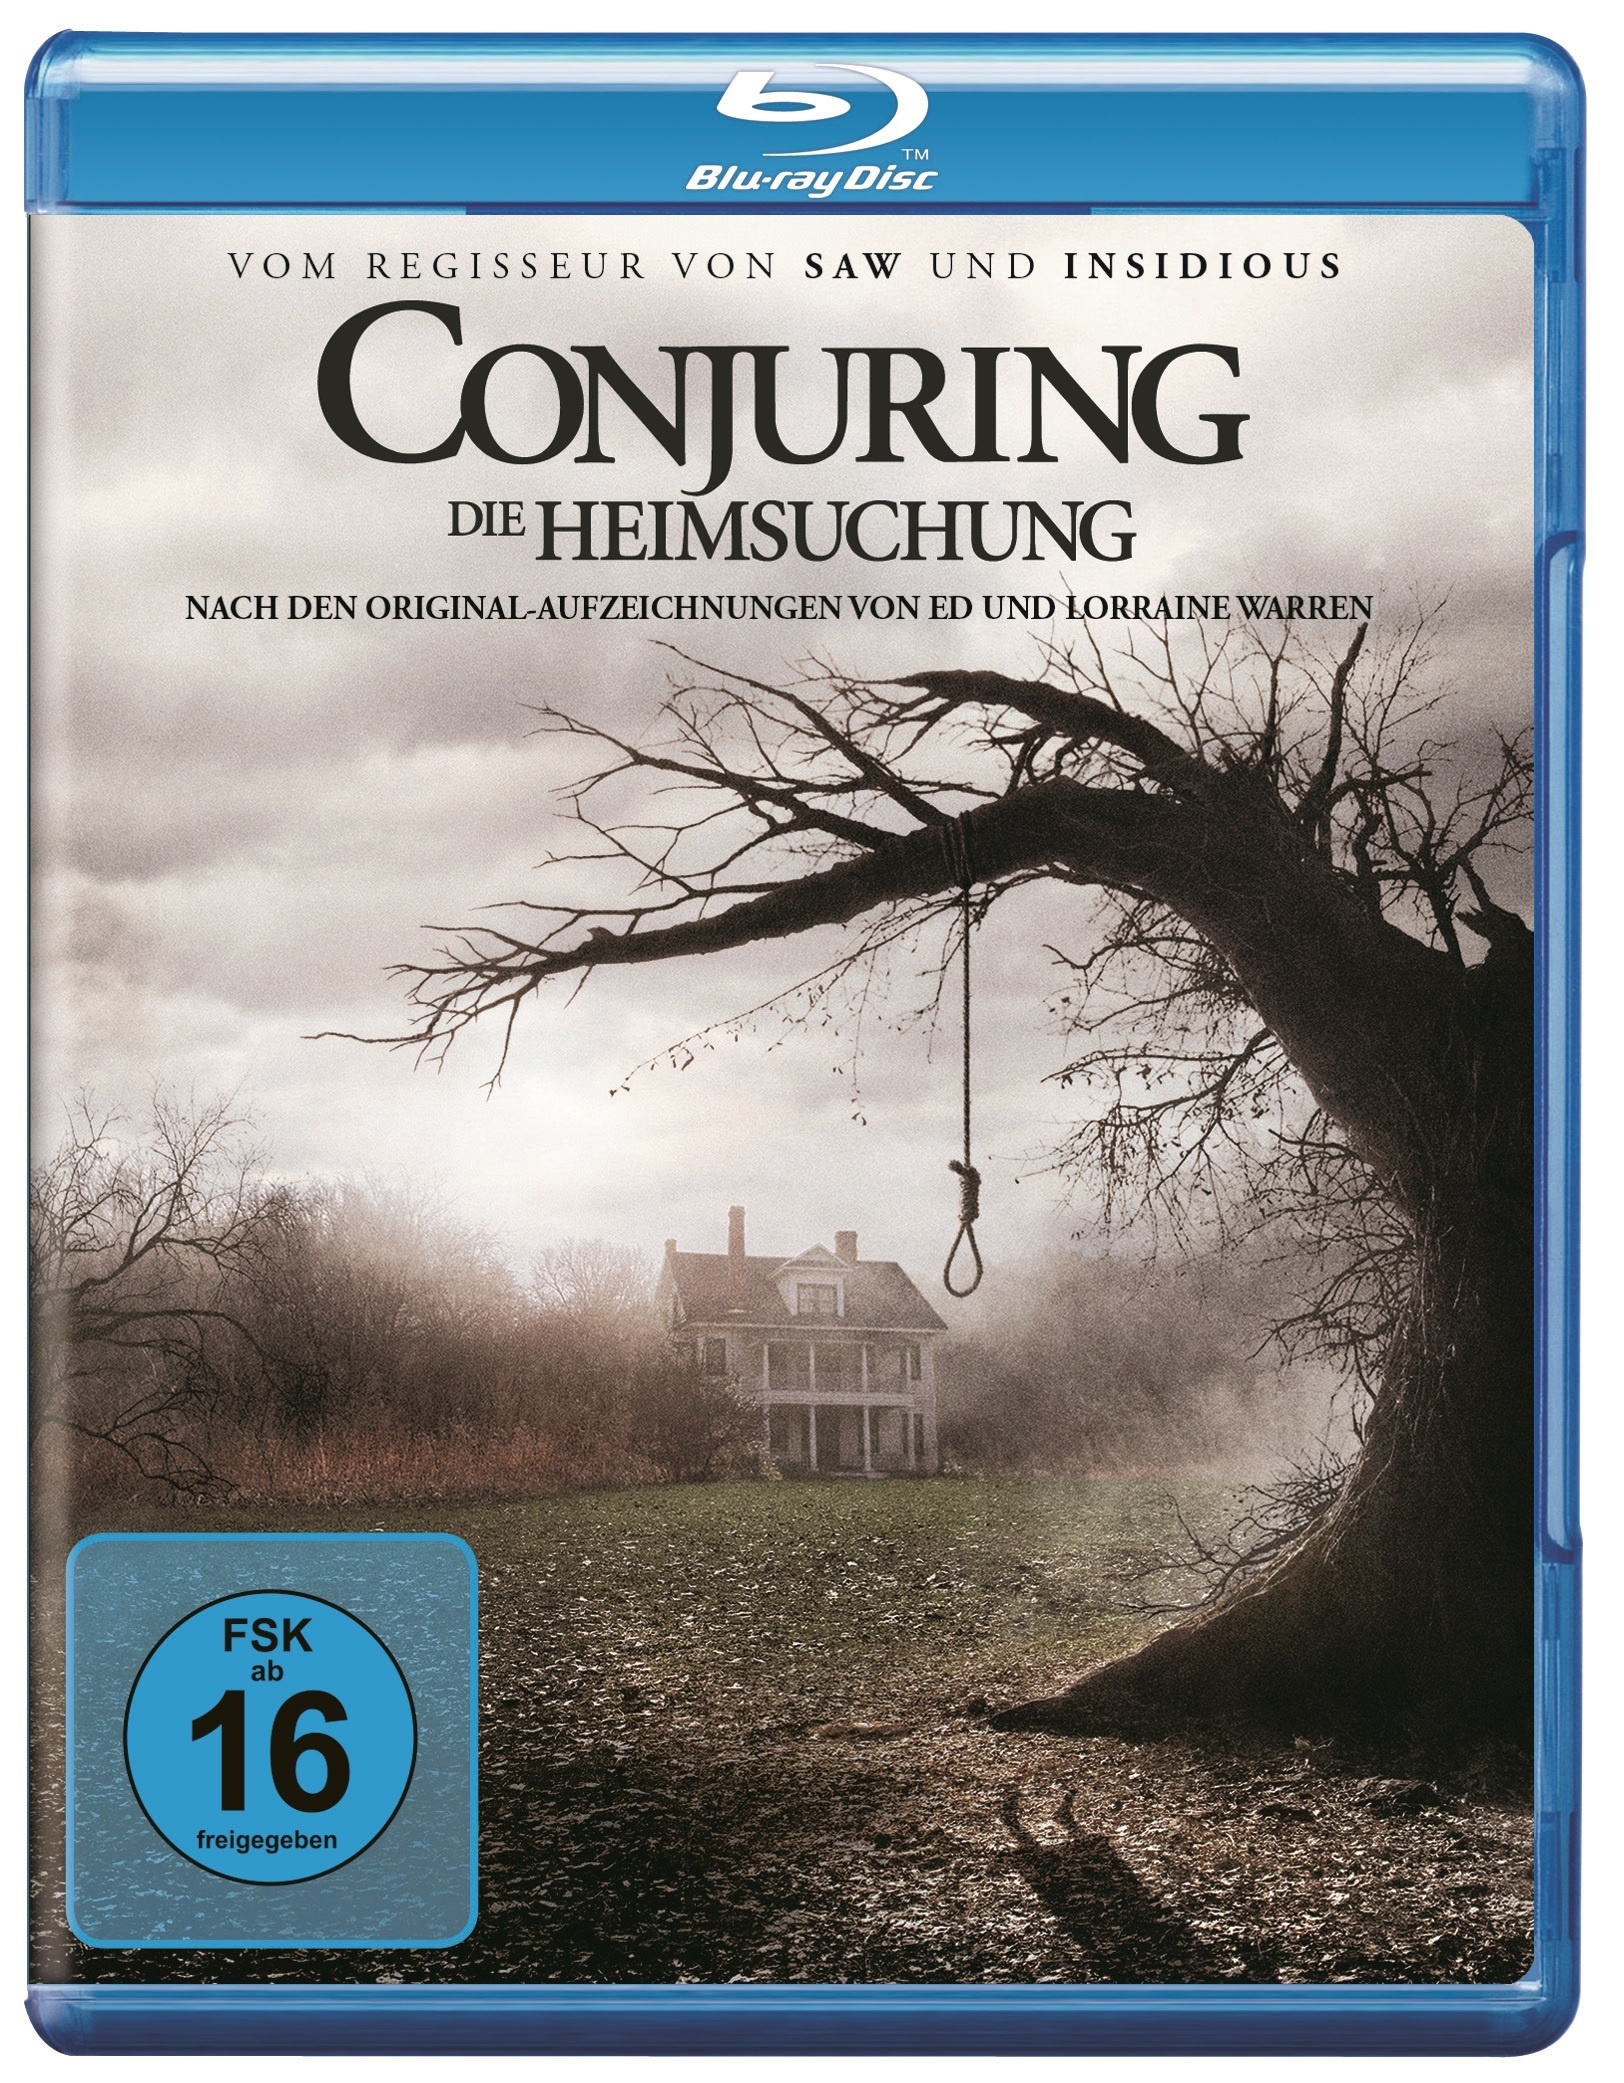 Conjuring - Die Heimsuchung (Blu-ray)